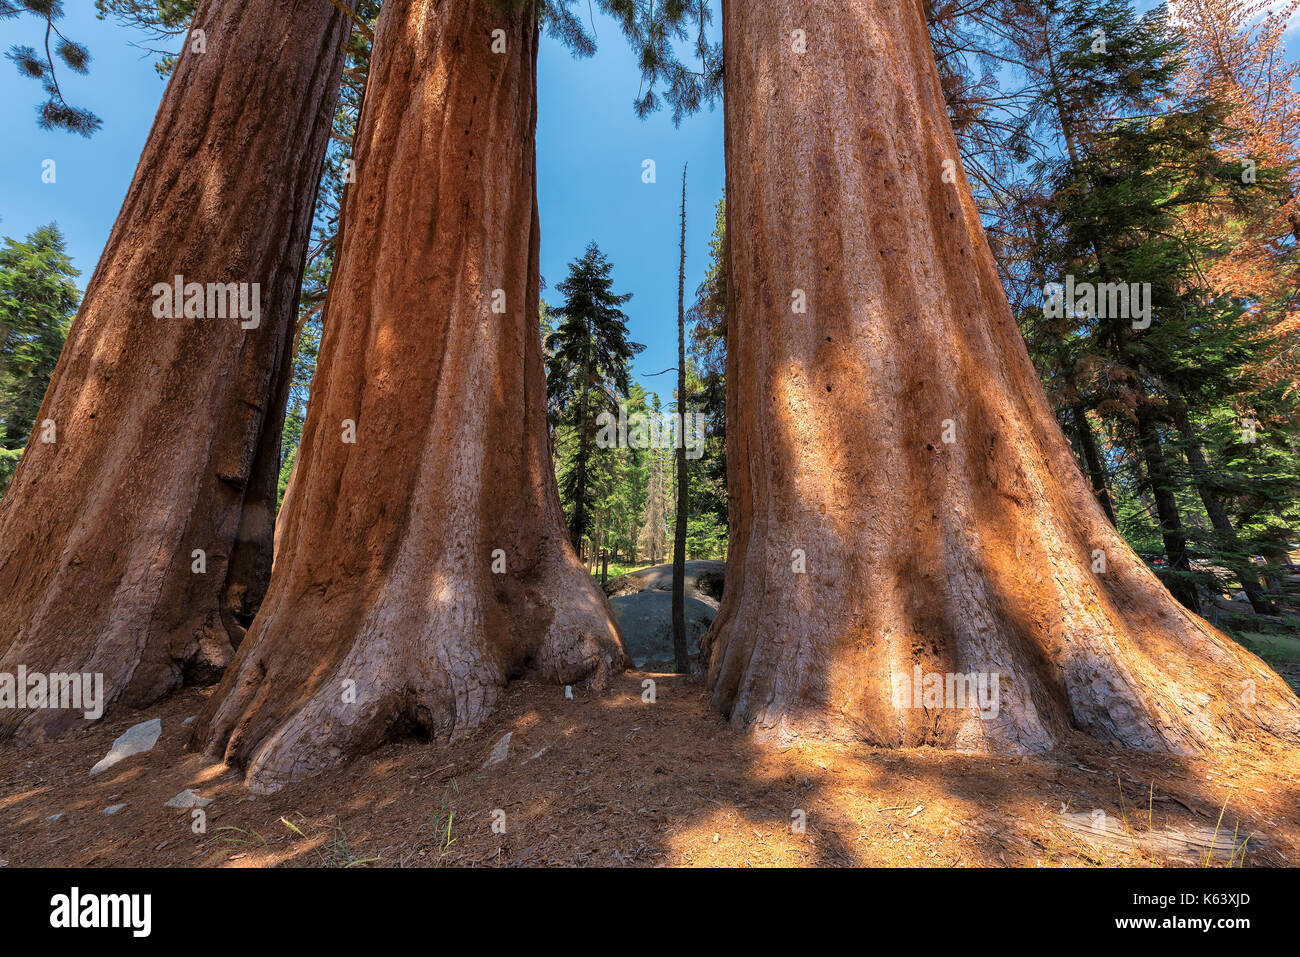 Sequoie giganti in Sequoia National Park, California sierra nevada. Foto Stock